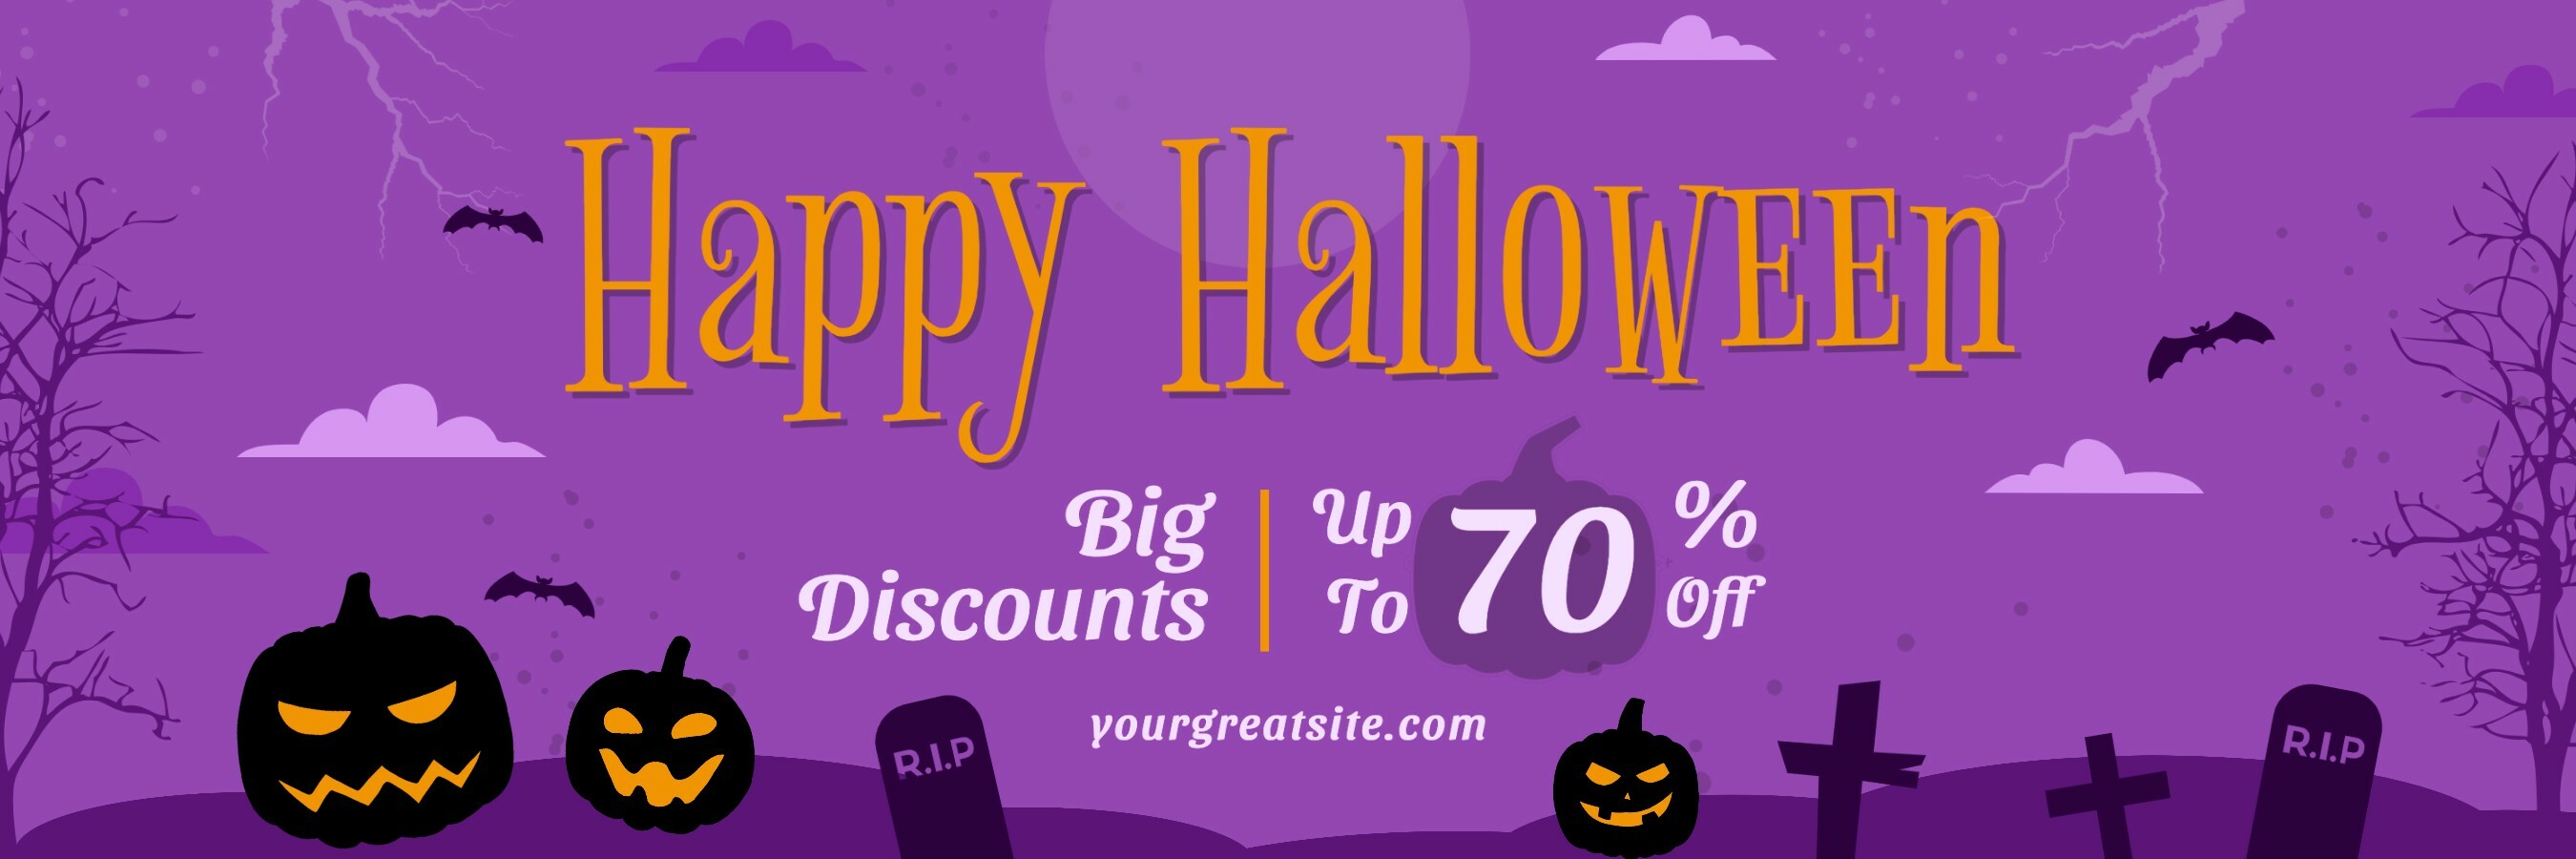 Seasonal Halloween Discount Twitter Header